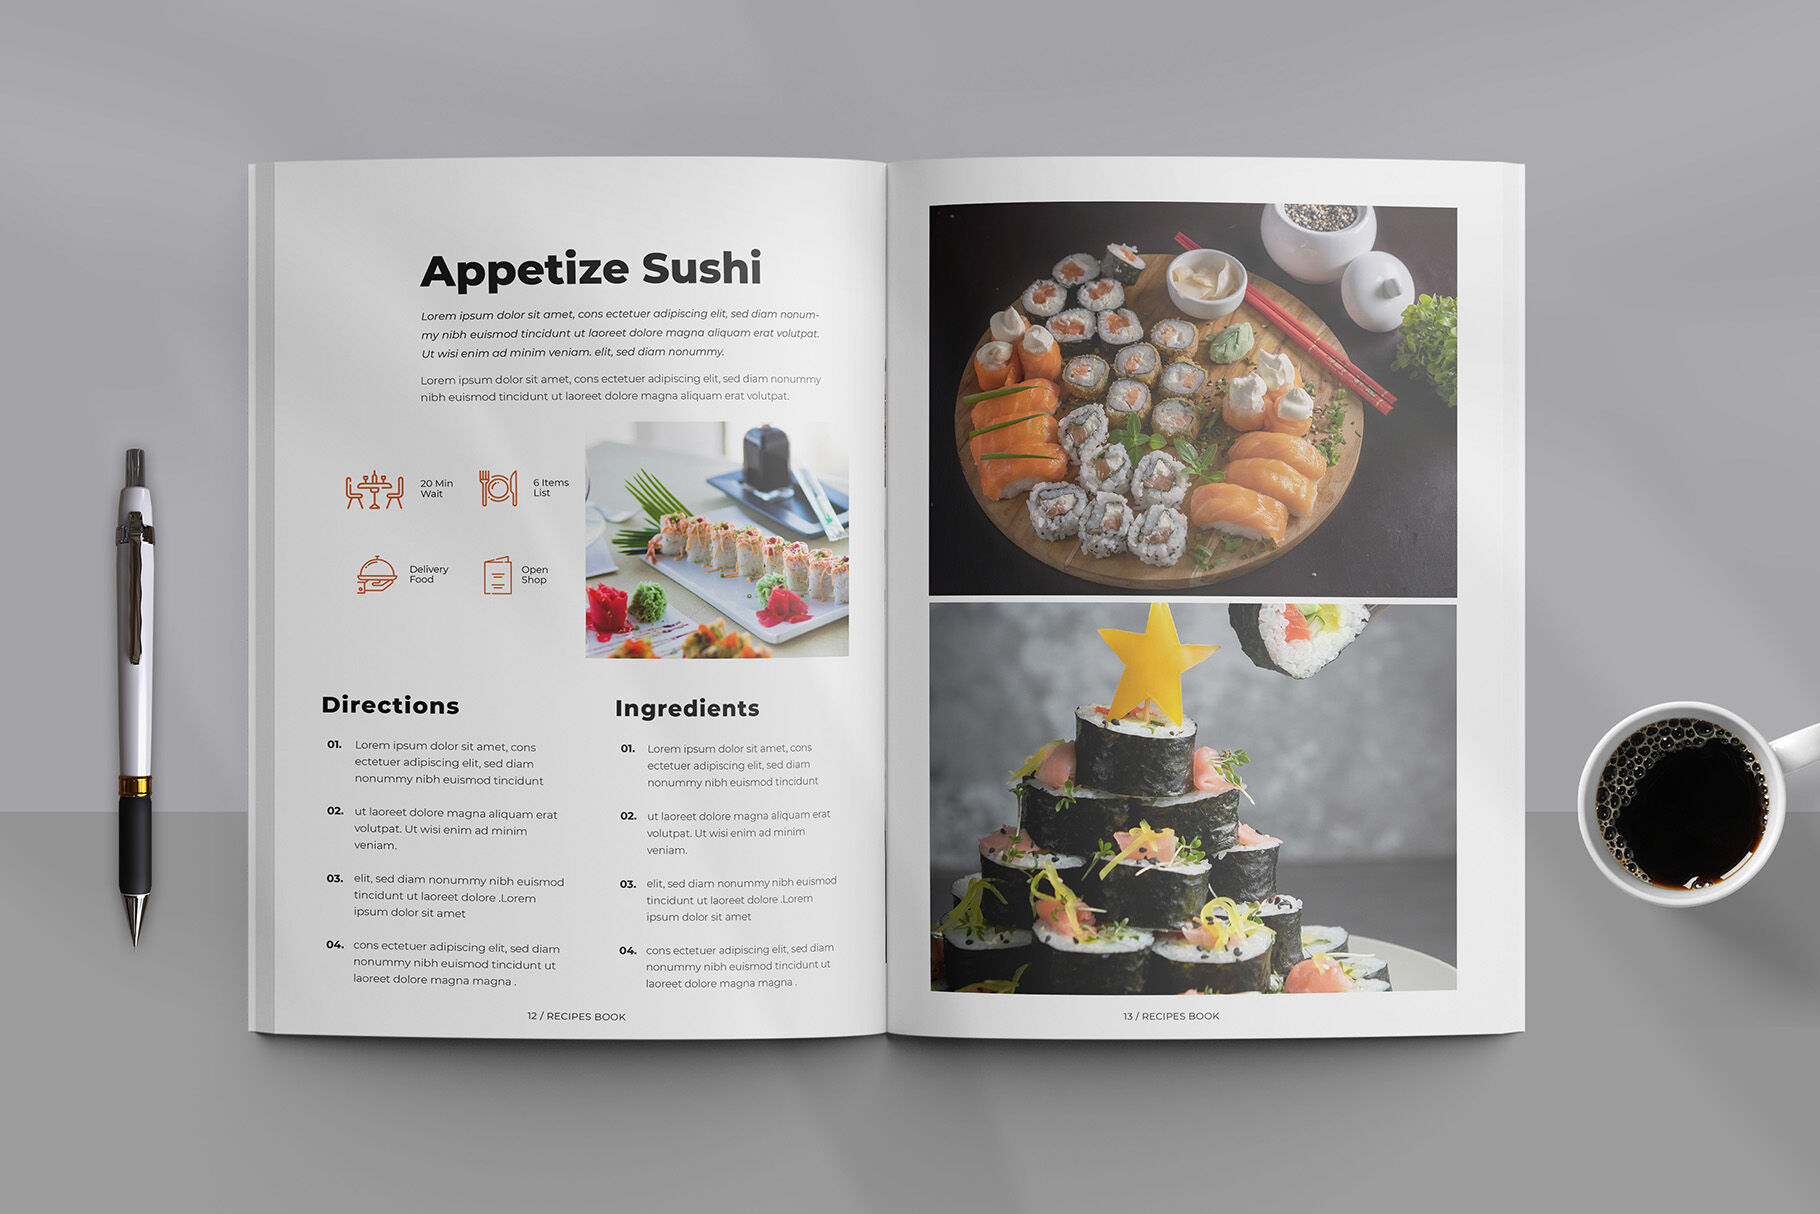 https://media1.thehungryjpeg.com/thumbs2/ori_4196790_bpw09e5mzoqxumrq0jc3lev4kf5hddsa8h3ri5az_recipe-book-or-cookbook-template-design.jpg